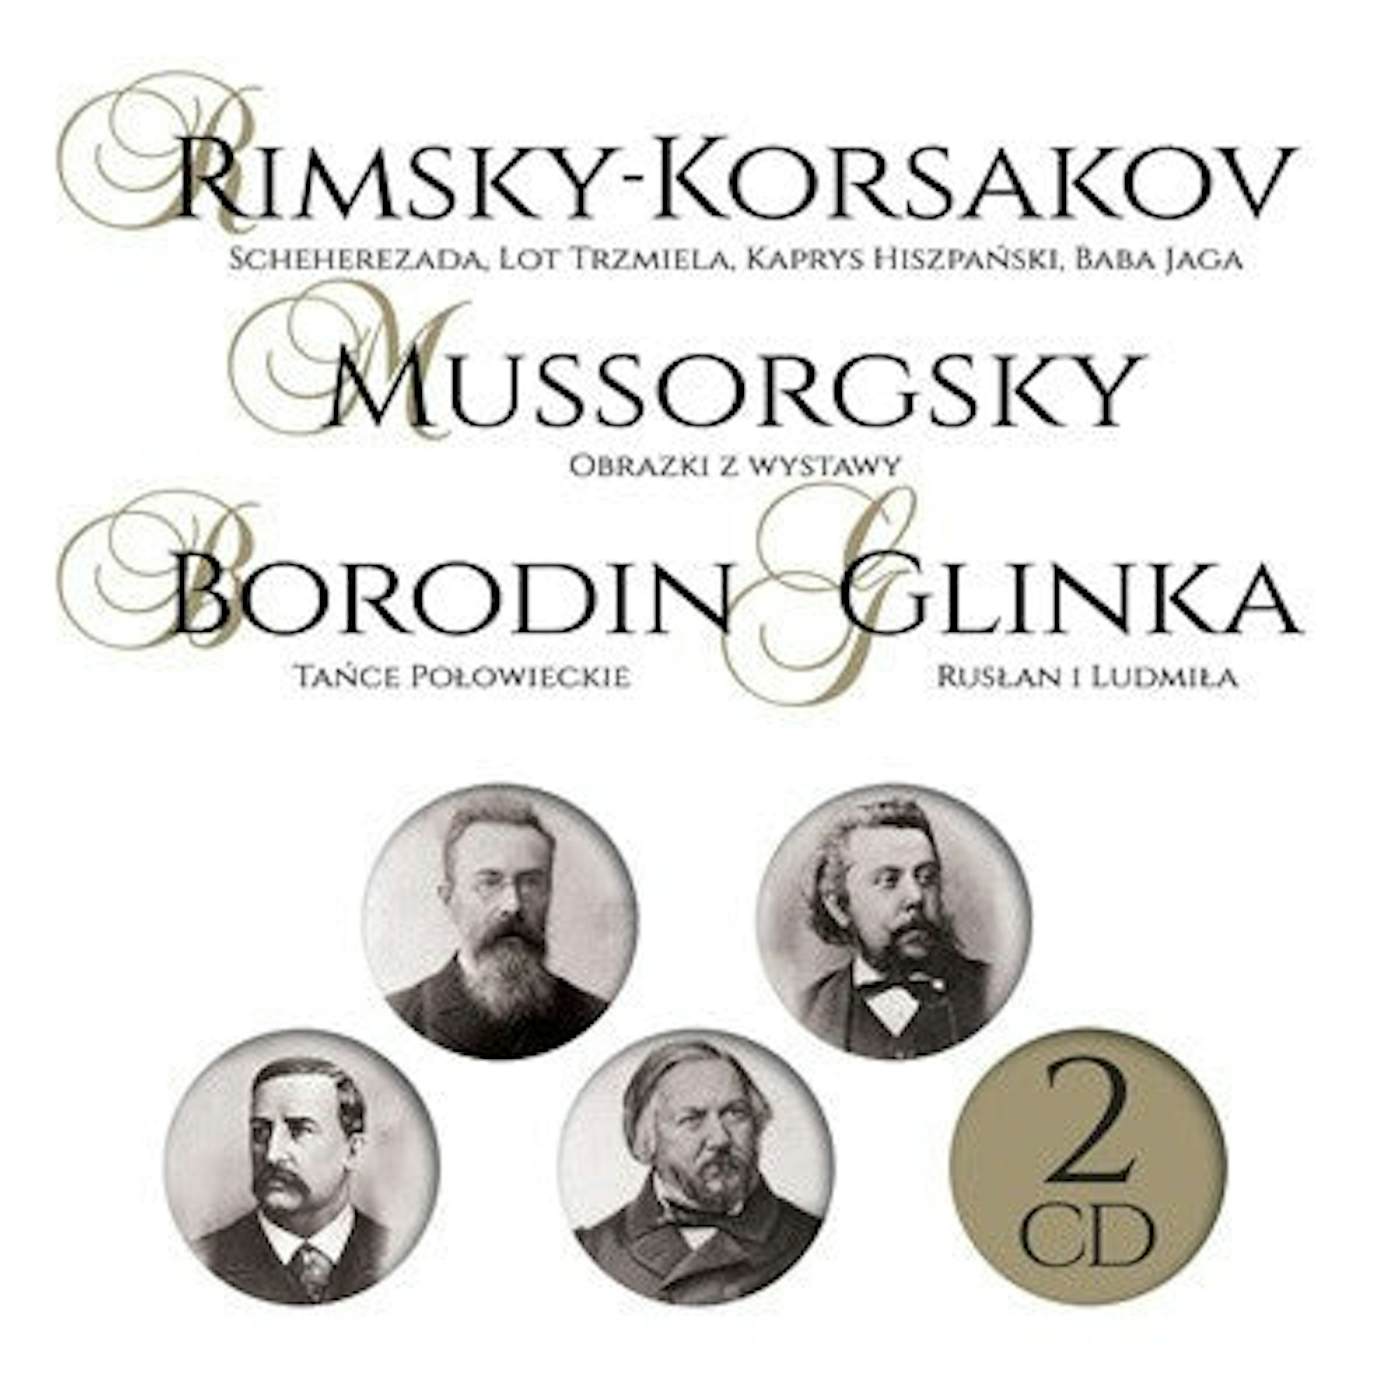 Rimsky-Korsakov SCHEHERZADA, LOT TRZMIELA - RIMSKY KORSAKOV MUSSORGSKY BORODIN GLINKA (CD)